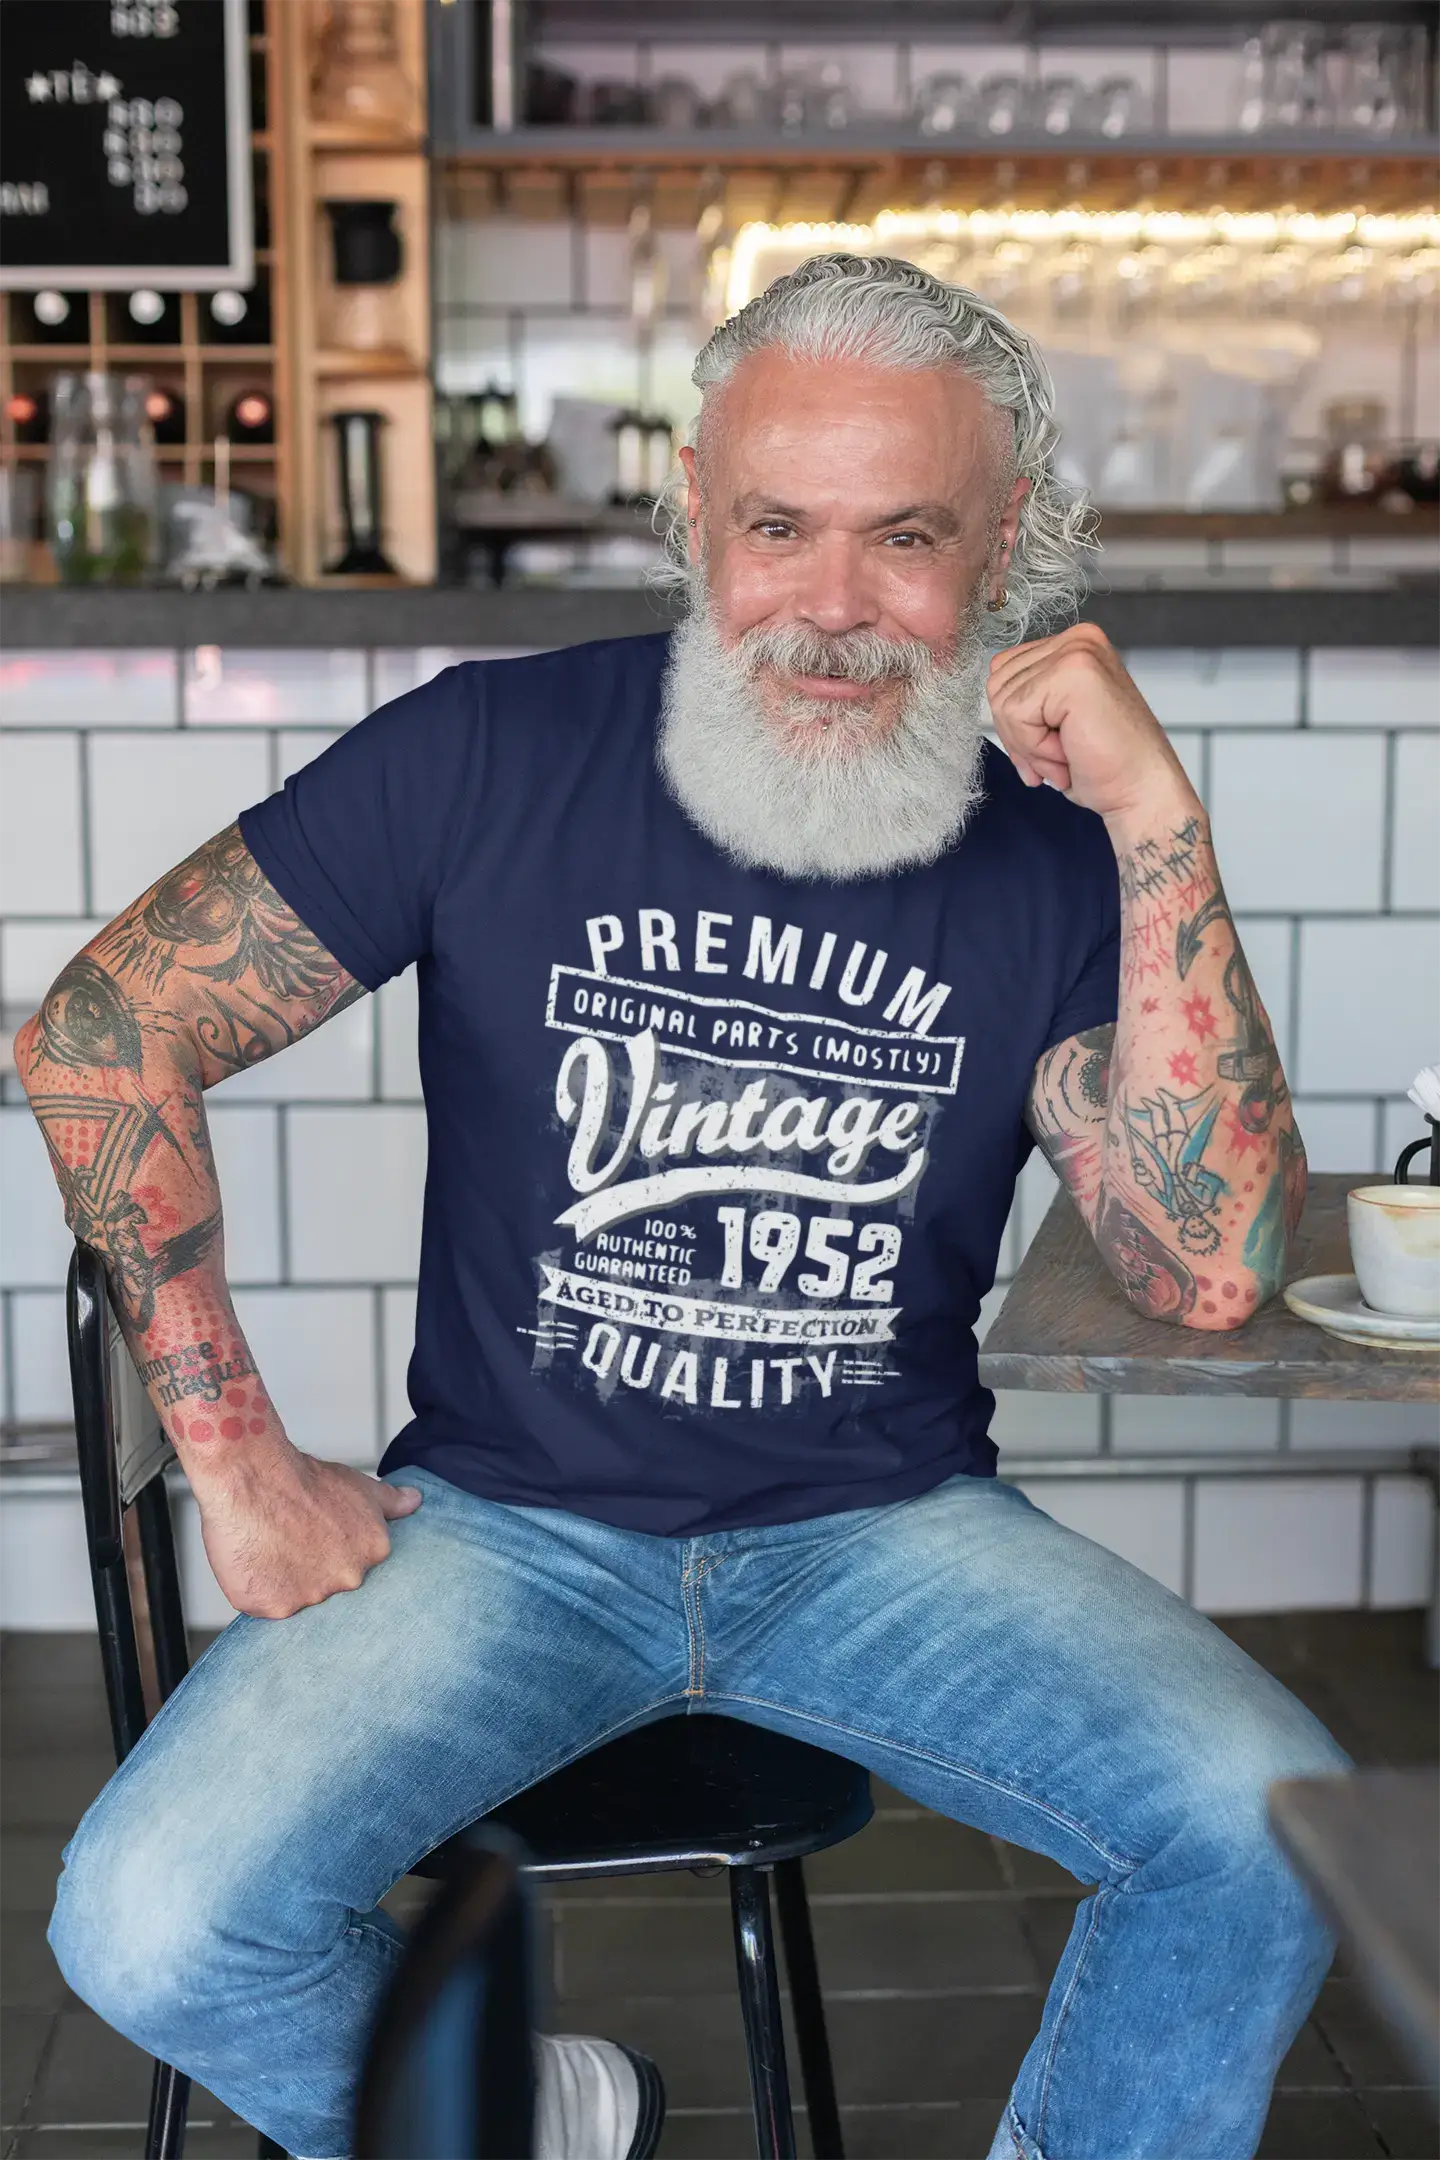 Ultrabasic - Homme T-Shirt Graphique 1952 Aged to Perfection Tee Shirt Cadeau d'anniversaire